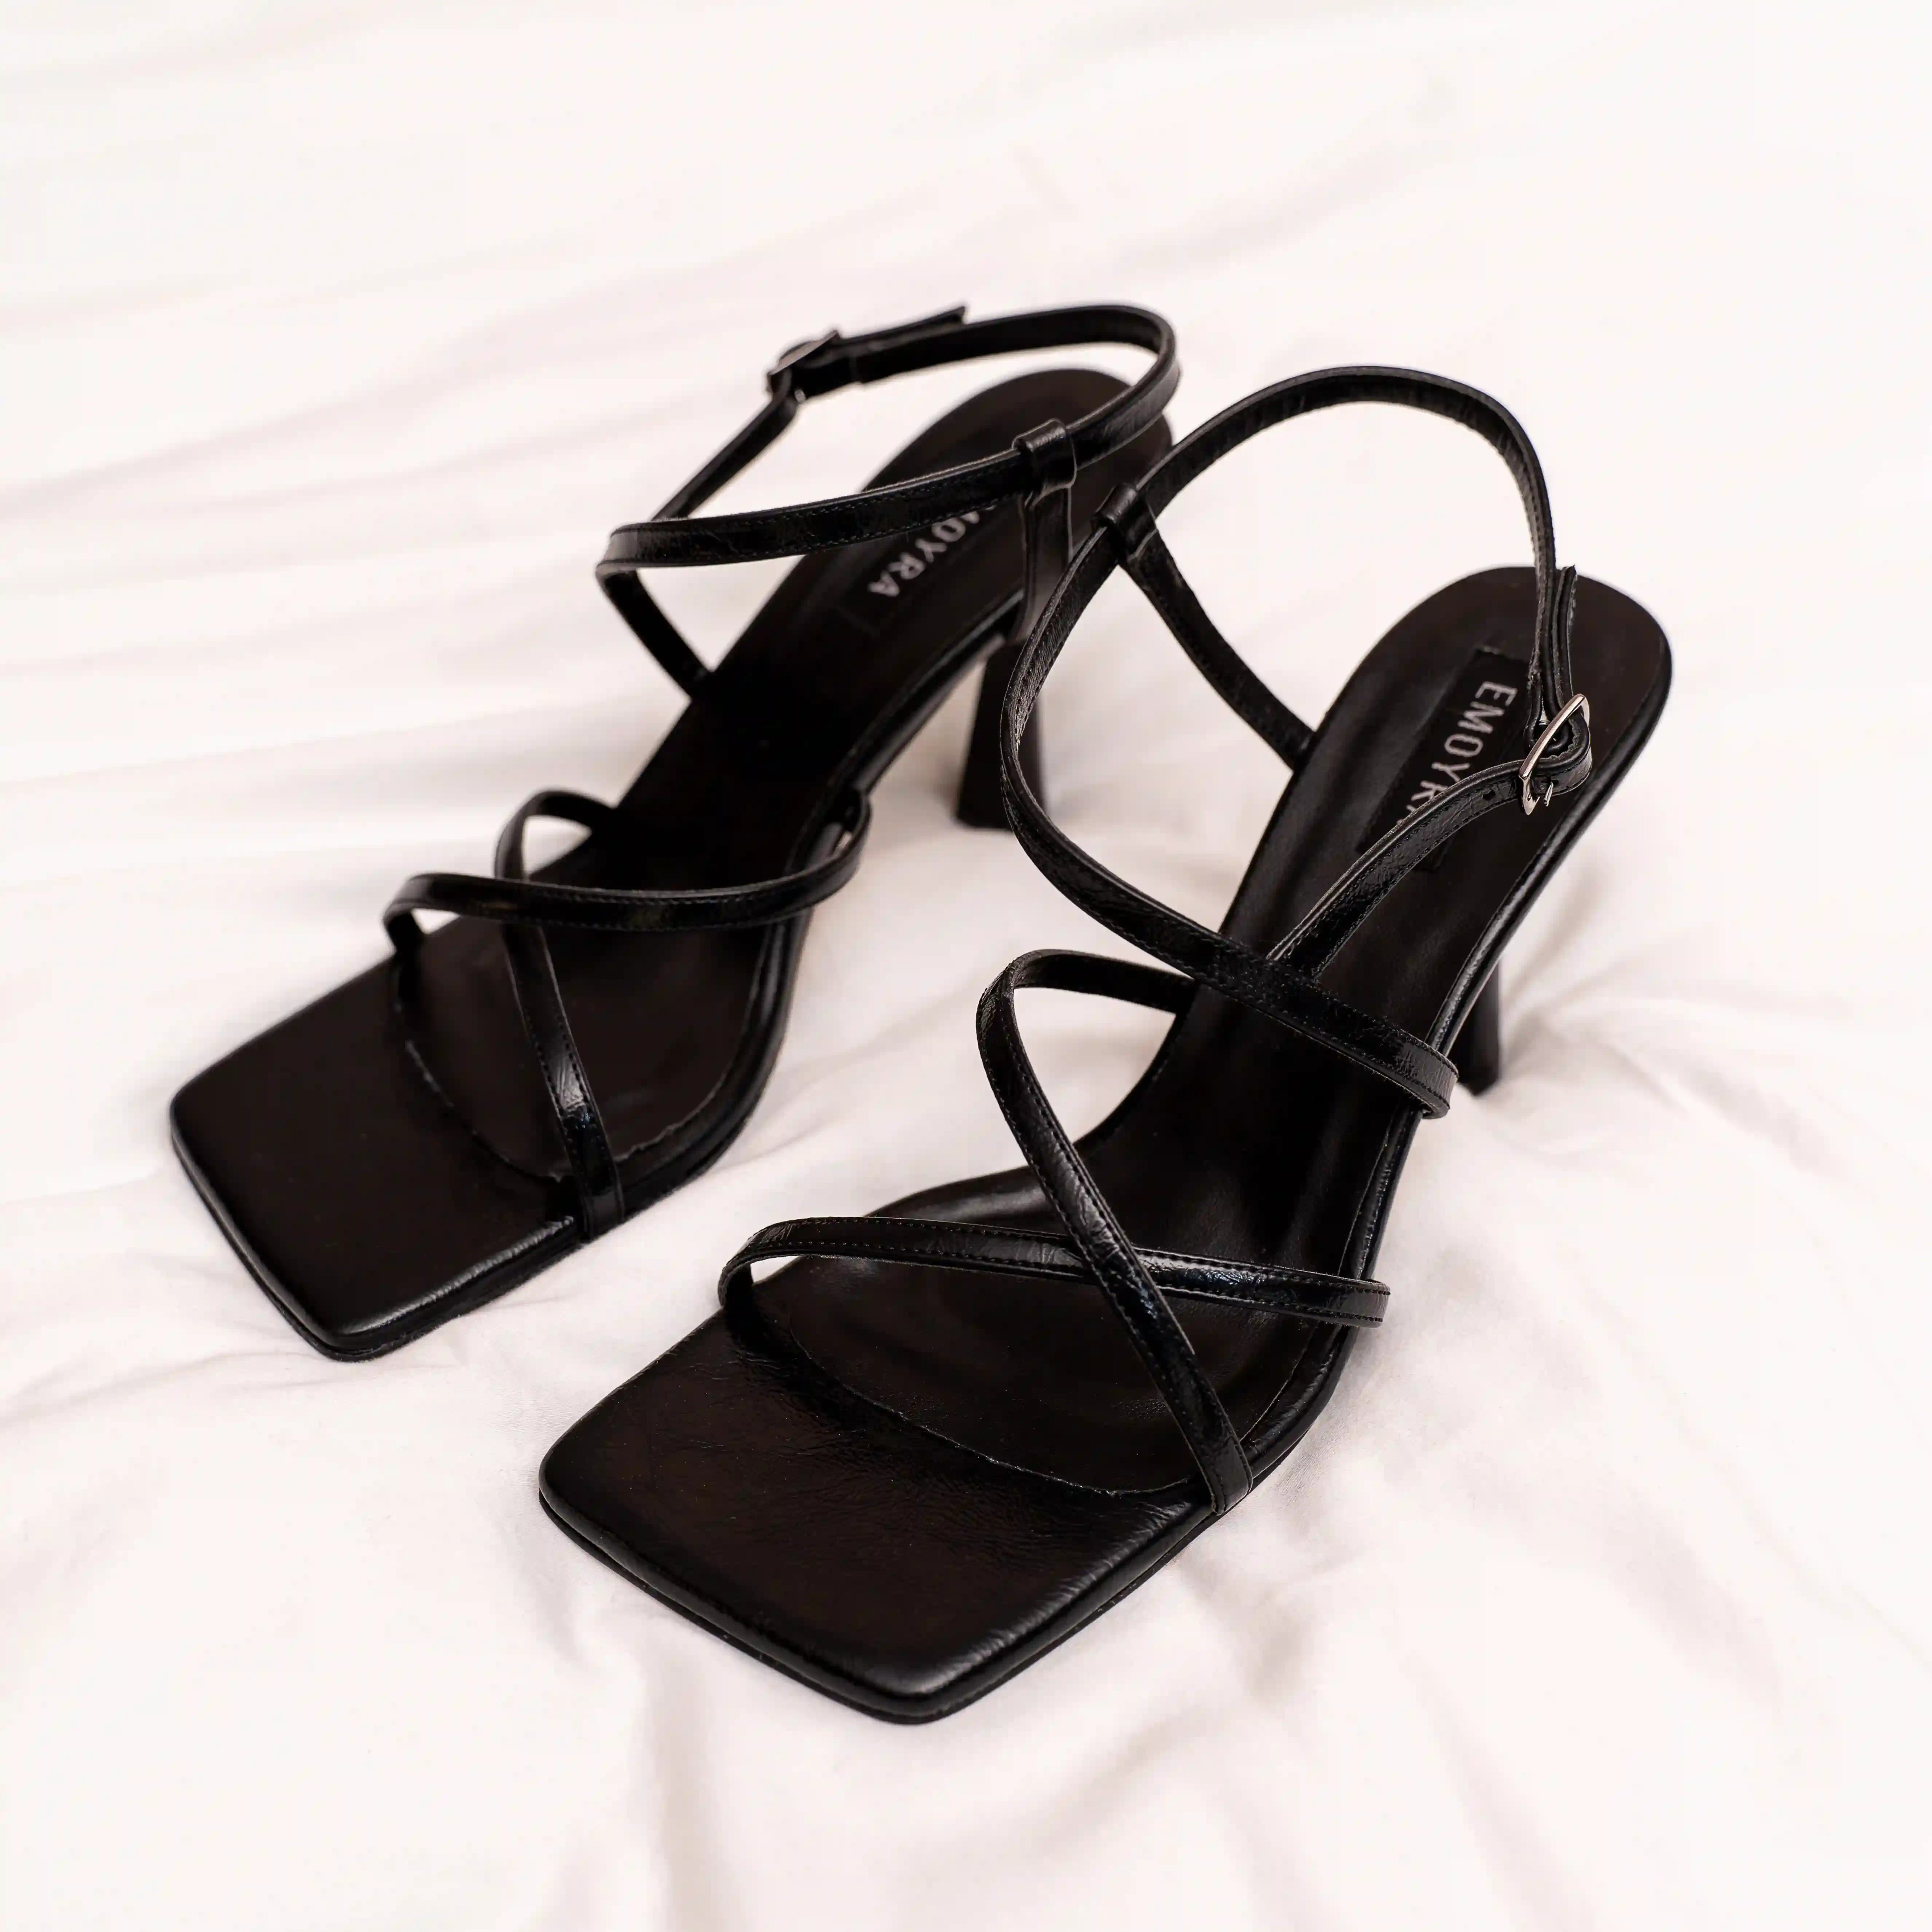 Metallic Thin High-Heeled Shoes - Black